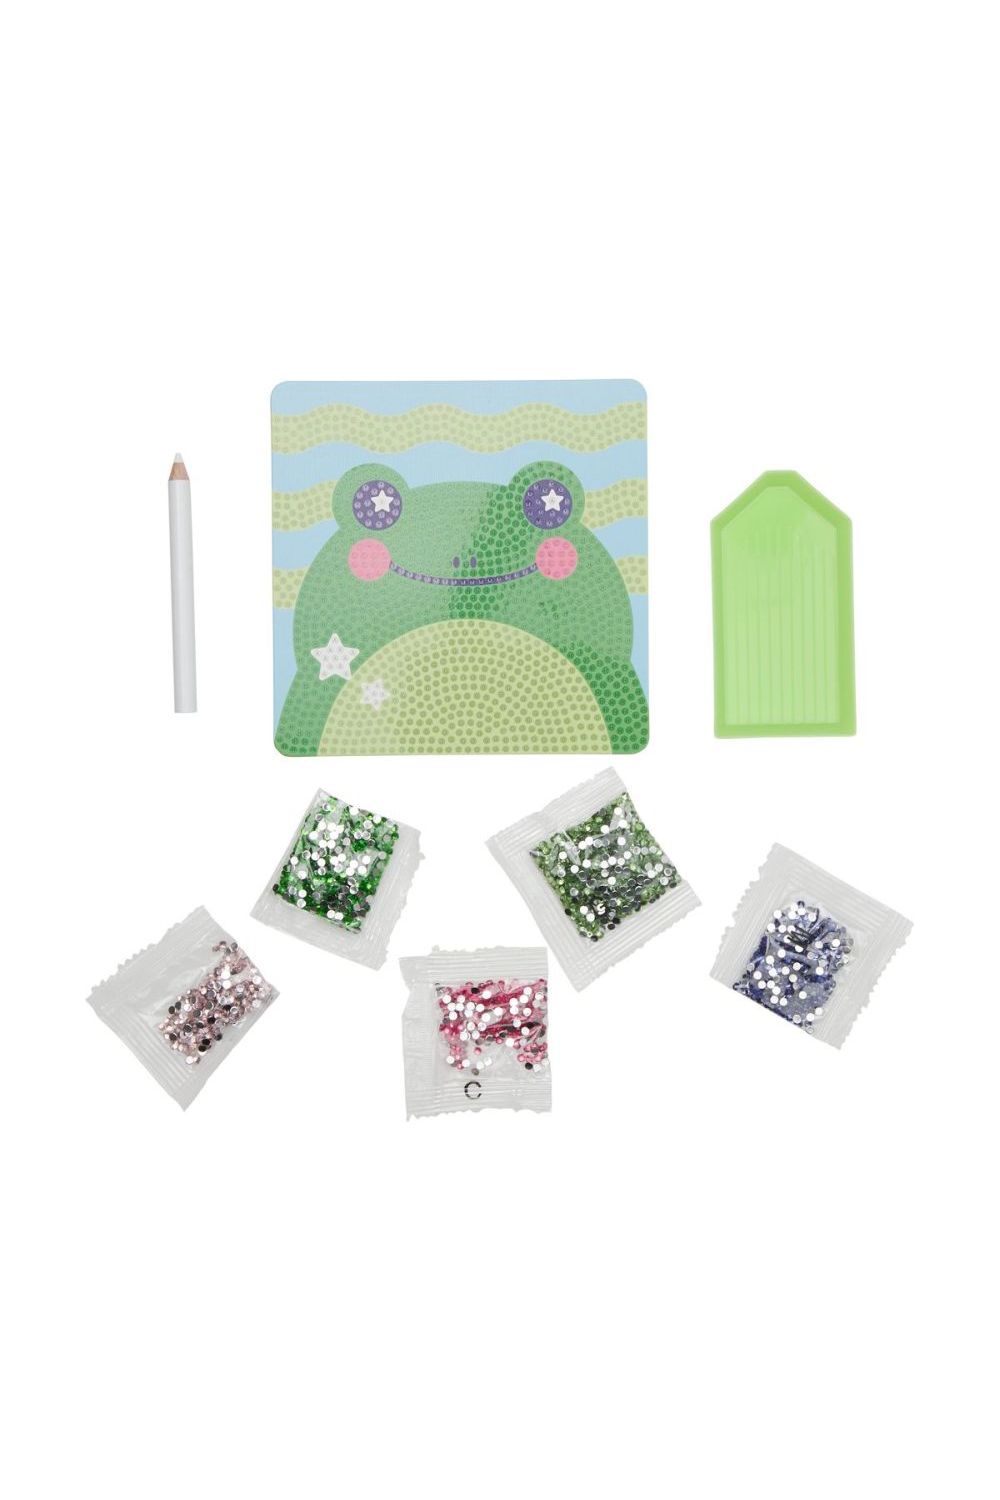 Razzle Dazzle Mini DIY Gem Art Kit - Funny Frog